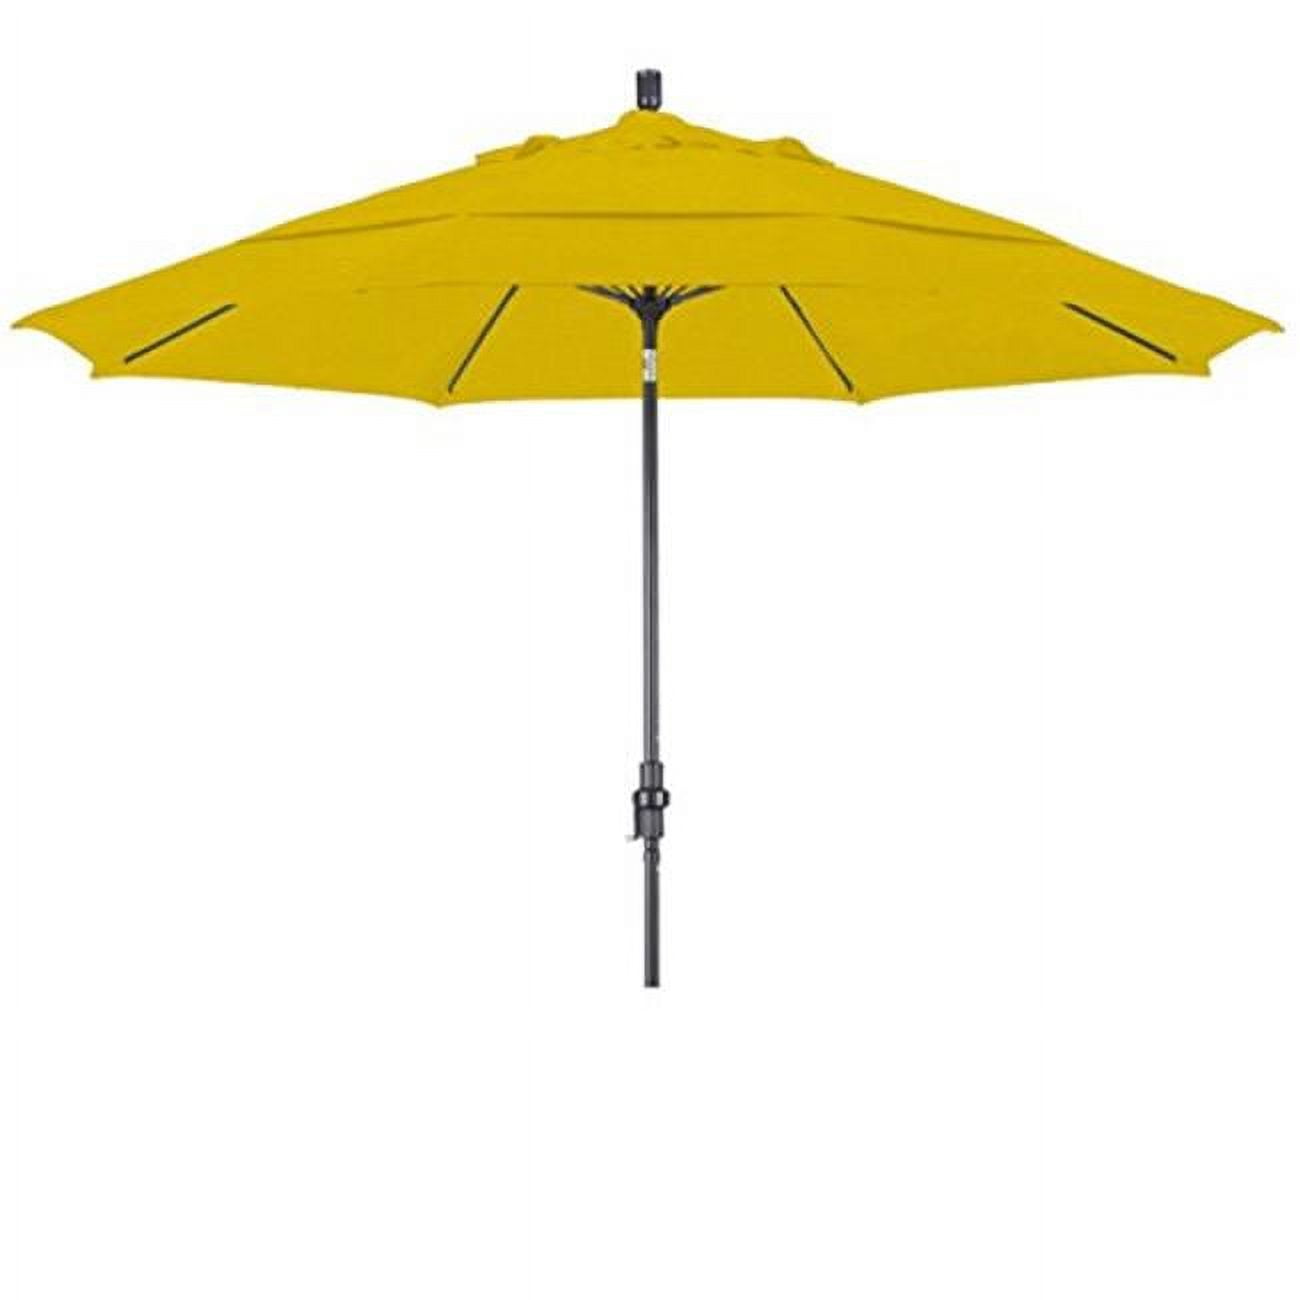 Gscuf118117-5457-dwv 11 Ft. Round Aluminum Pole Fiberglass Rib Market Umbrella, Collar Tilt & Bronze Pole - Sunbrella Sunflower Yellow